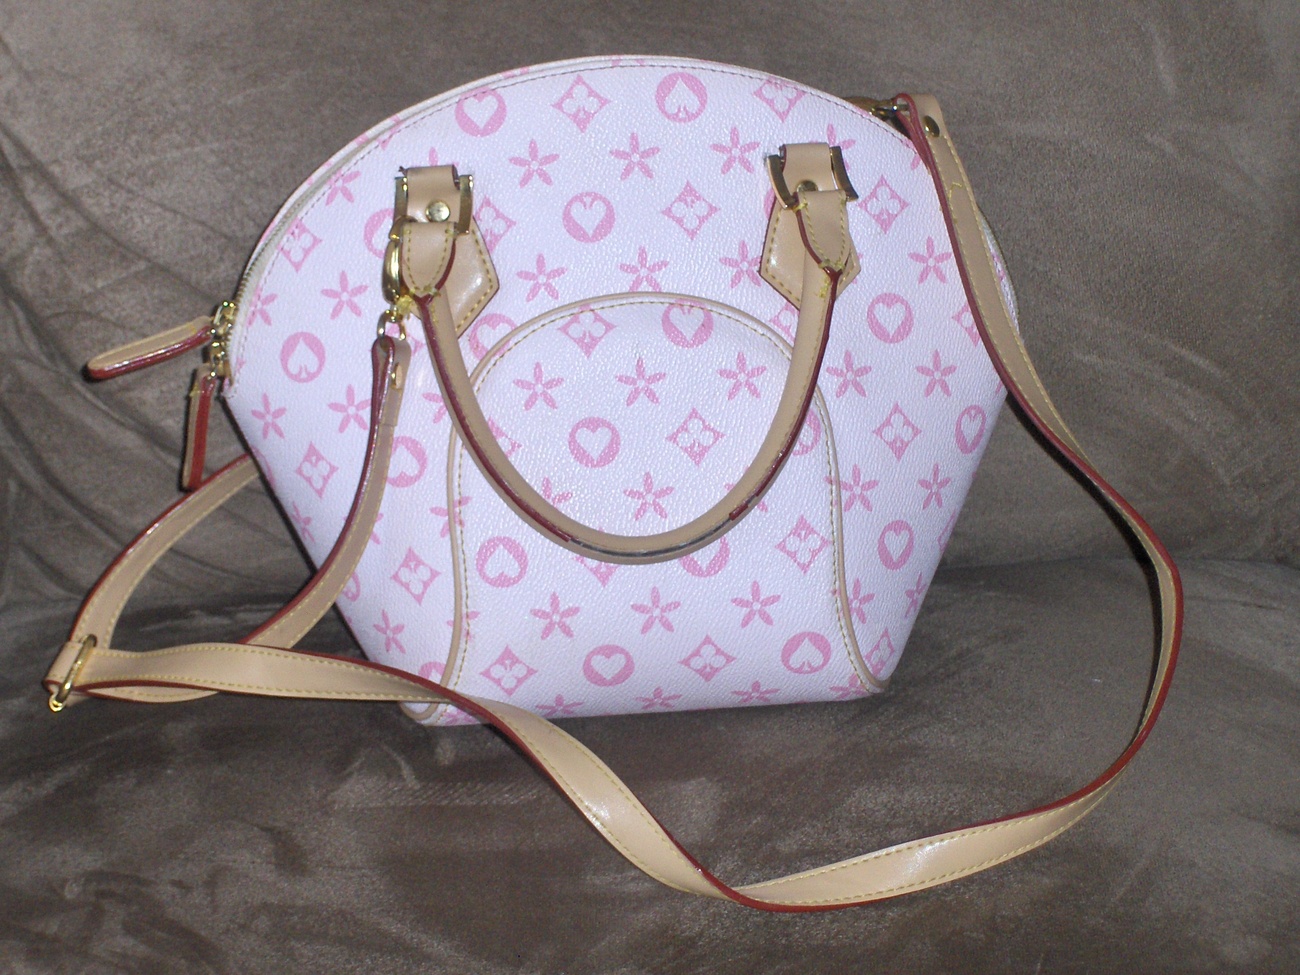 Bowling Bag Satchel Pink Hearts And Stars Purse - Handbags & Purses